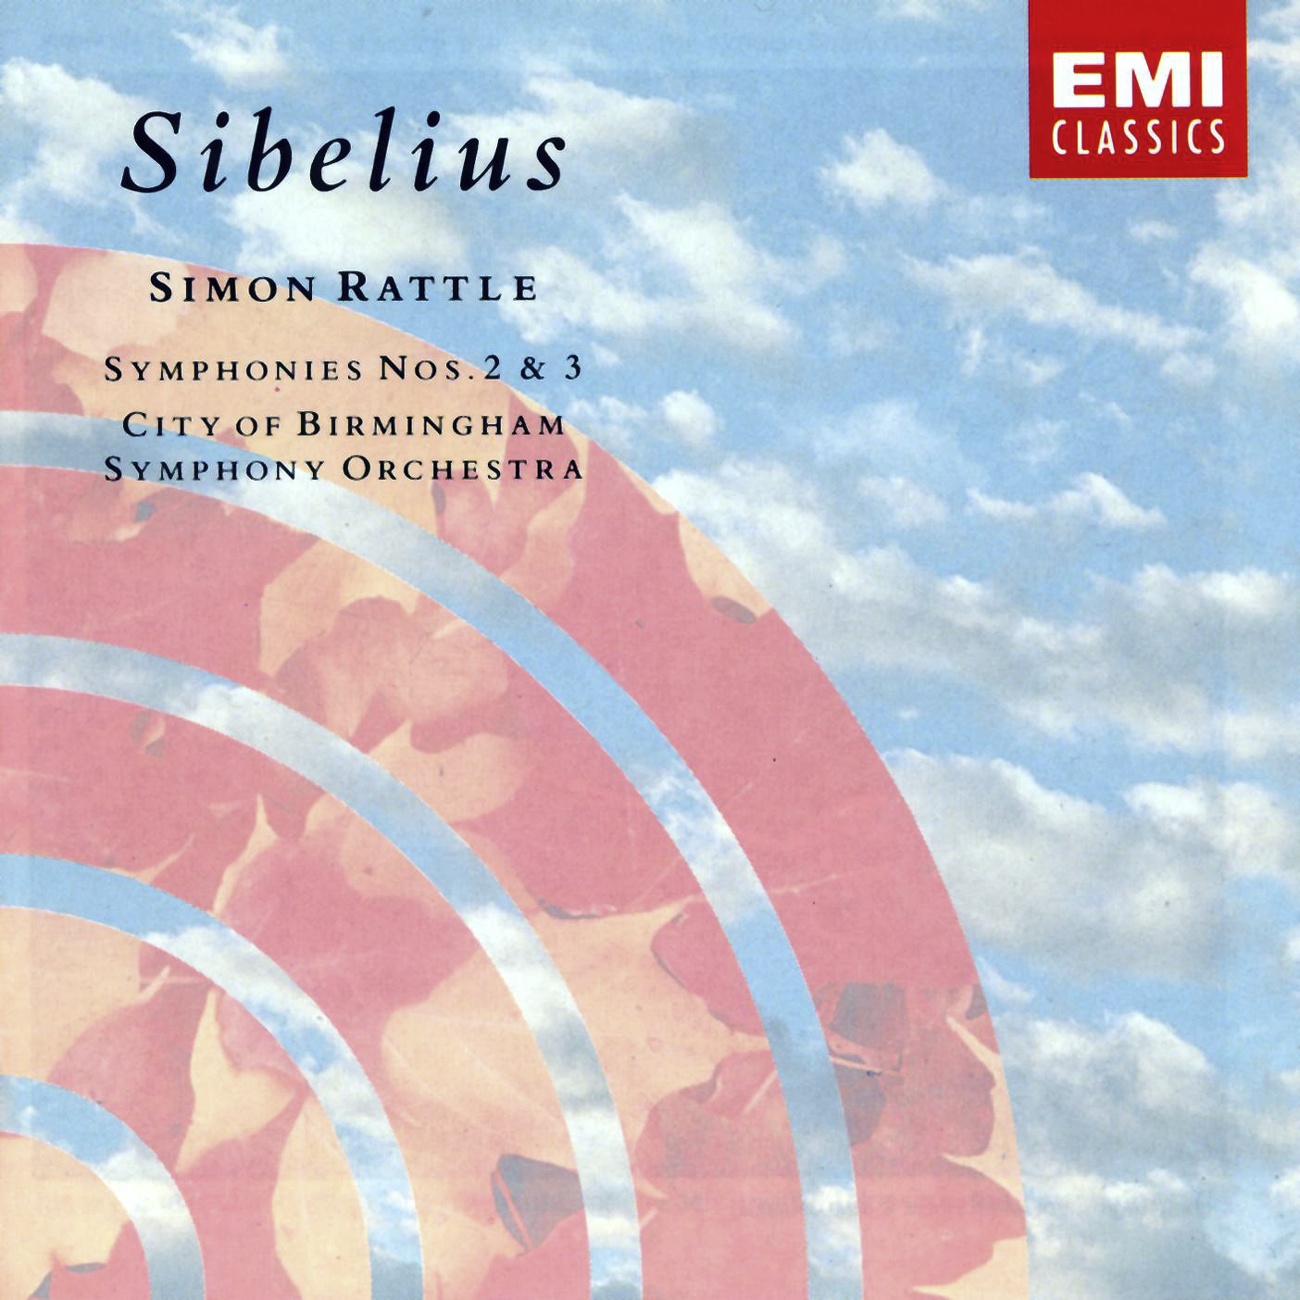 Sibelius: Symphony No. 3 in C, Op. 52: II. Andantino con moto, quasi allegretto